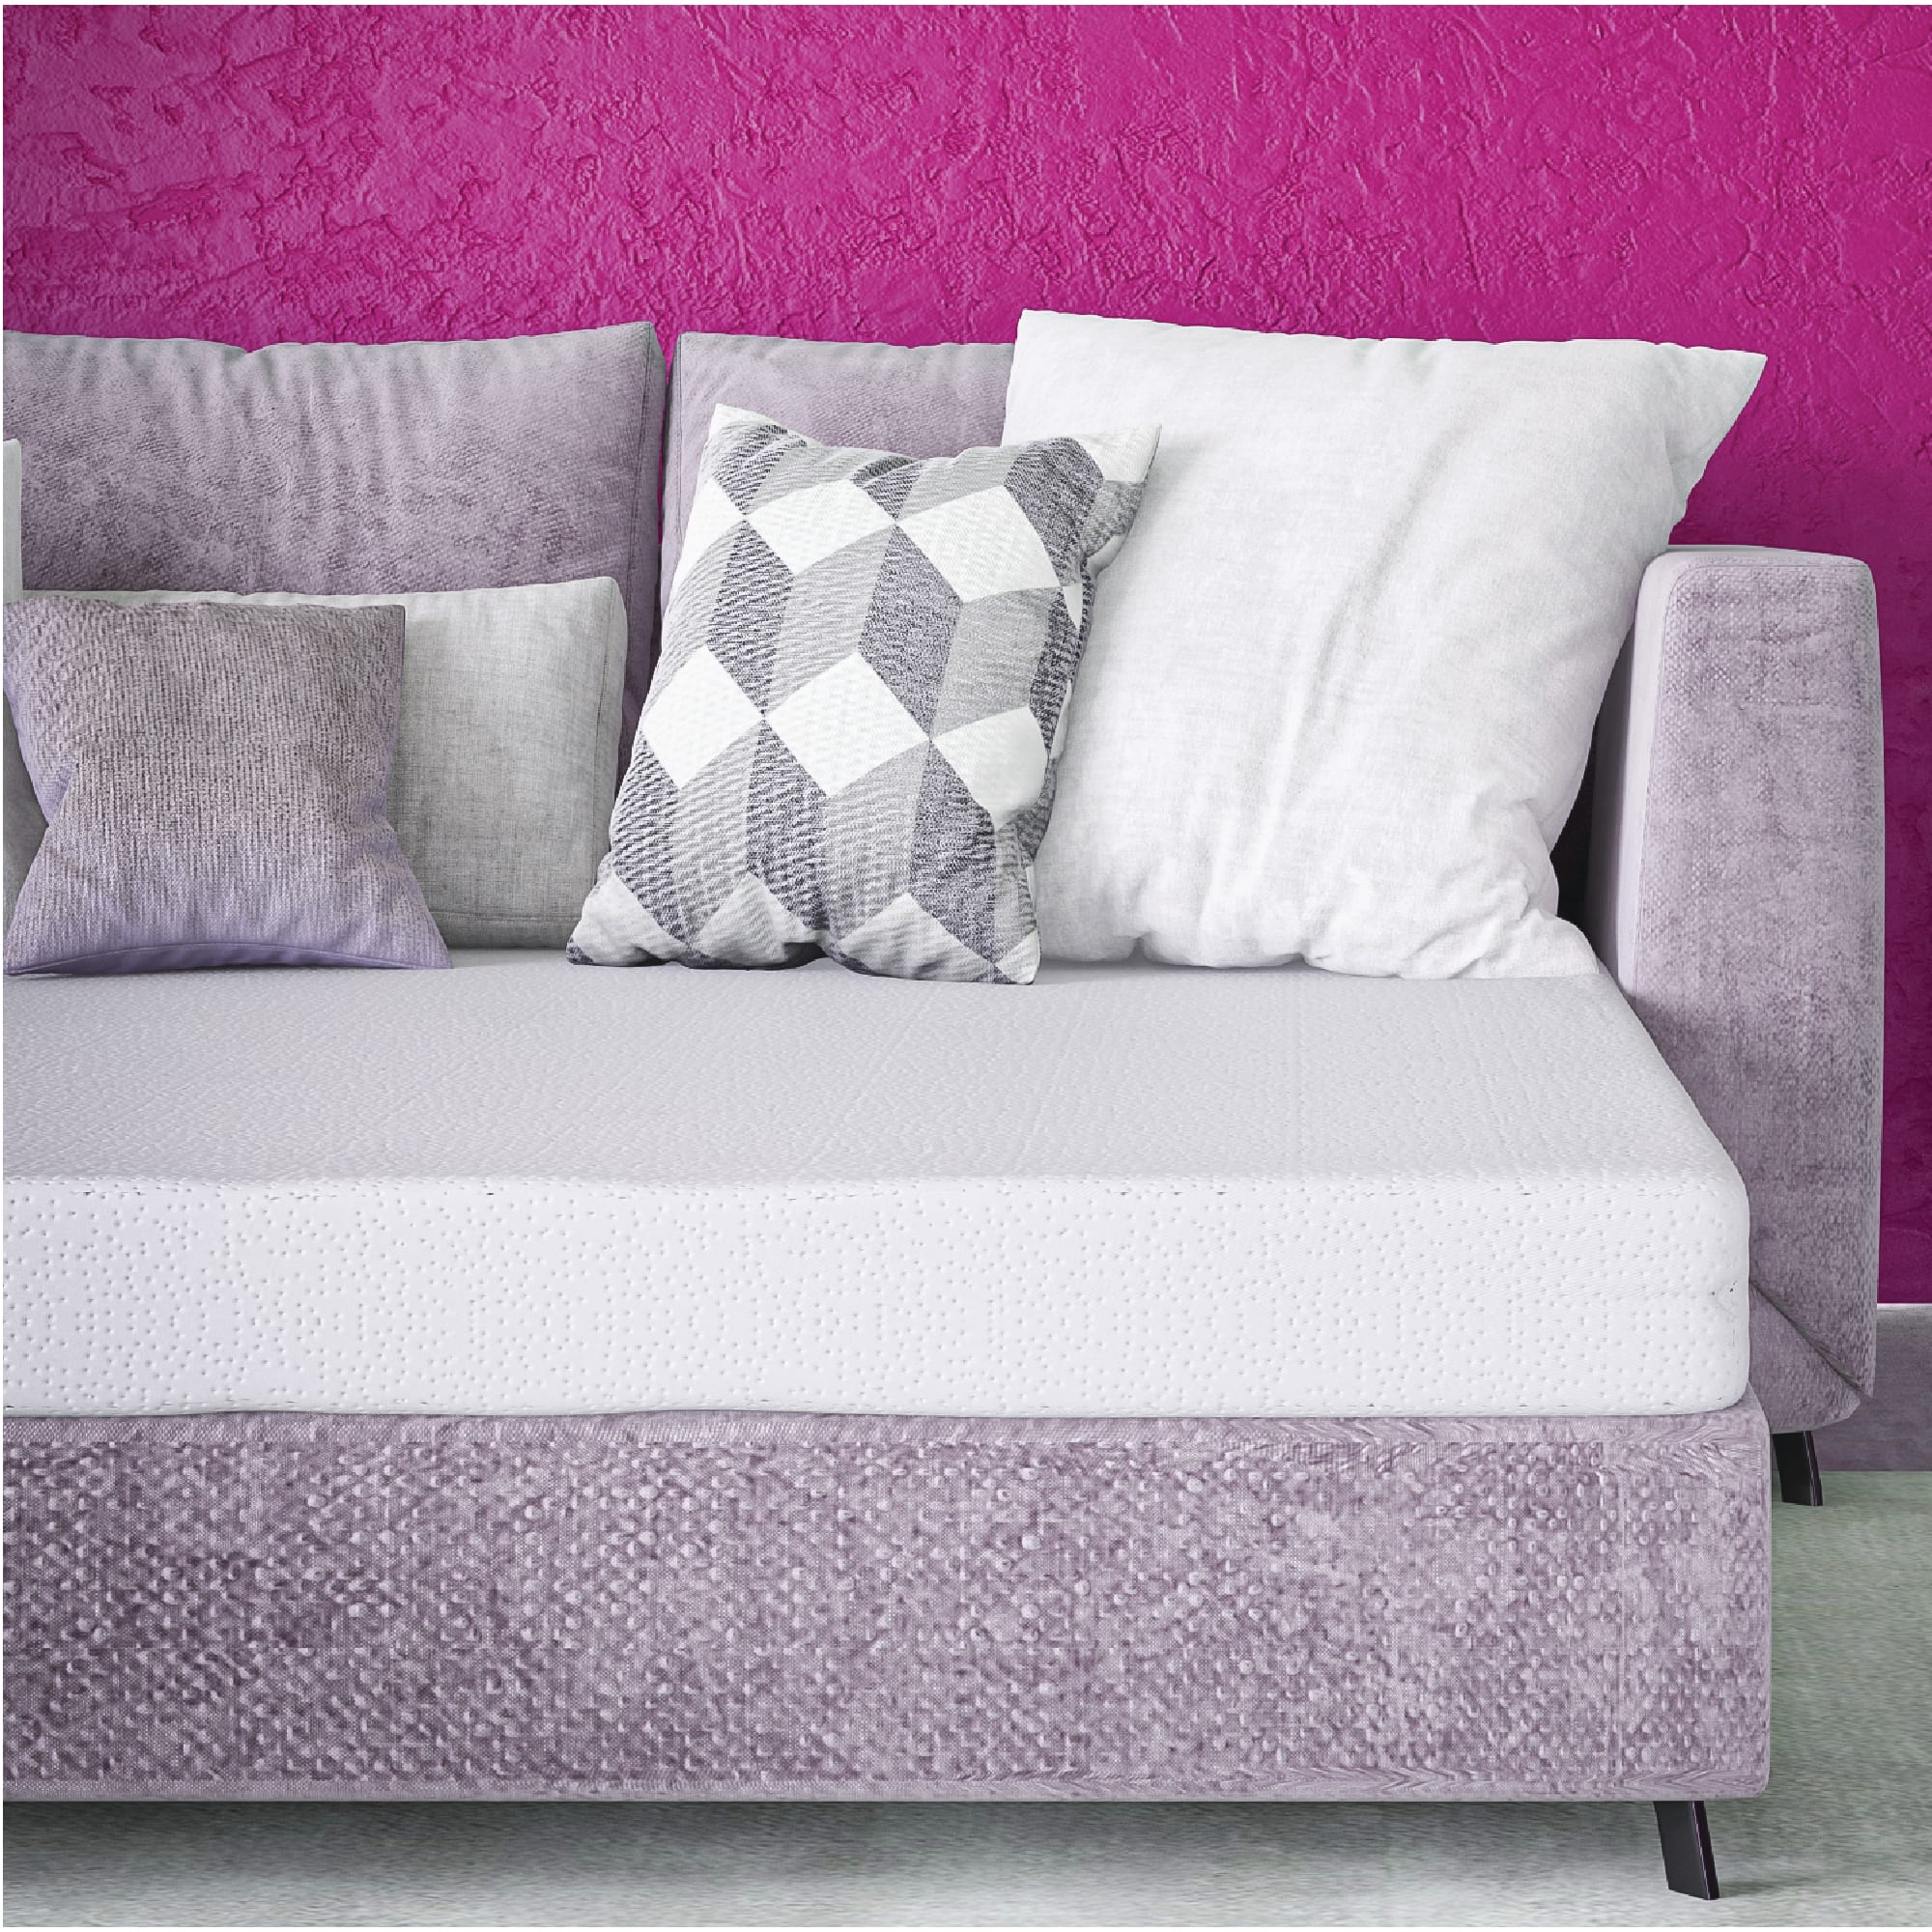 Classic Brands 4-Inch Memory Foam Replacement Sleep Sofa Bed Mattress, Queen - image 1 of 12